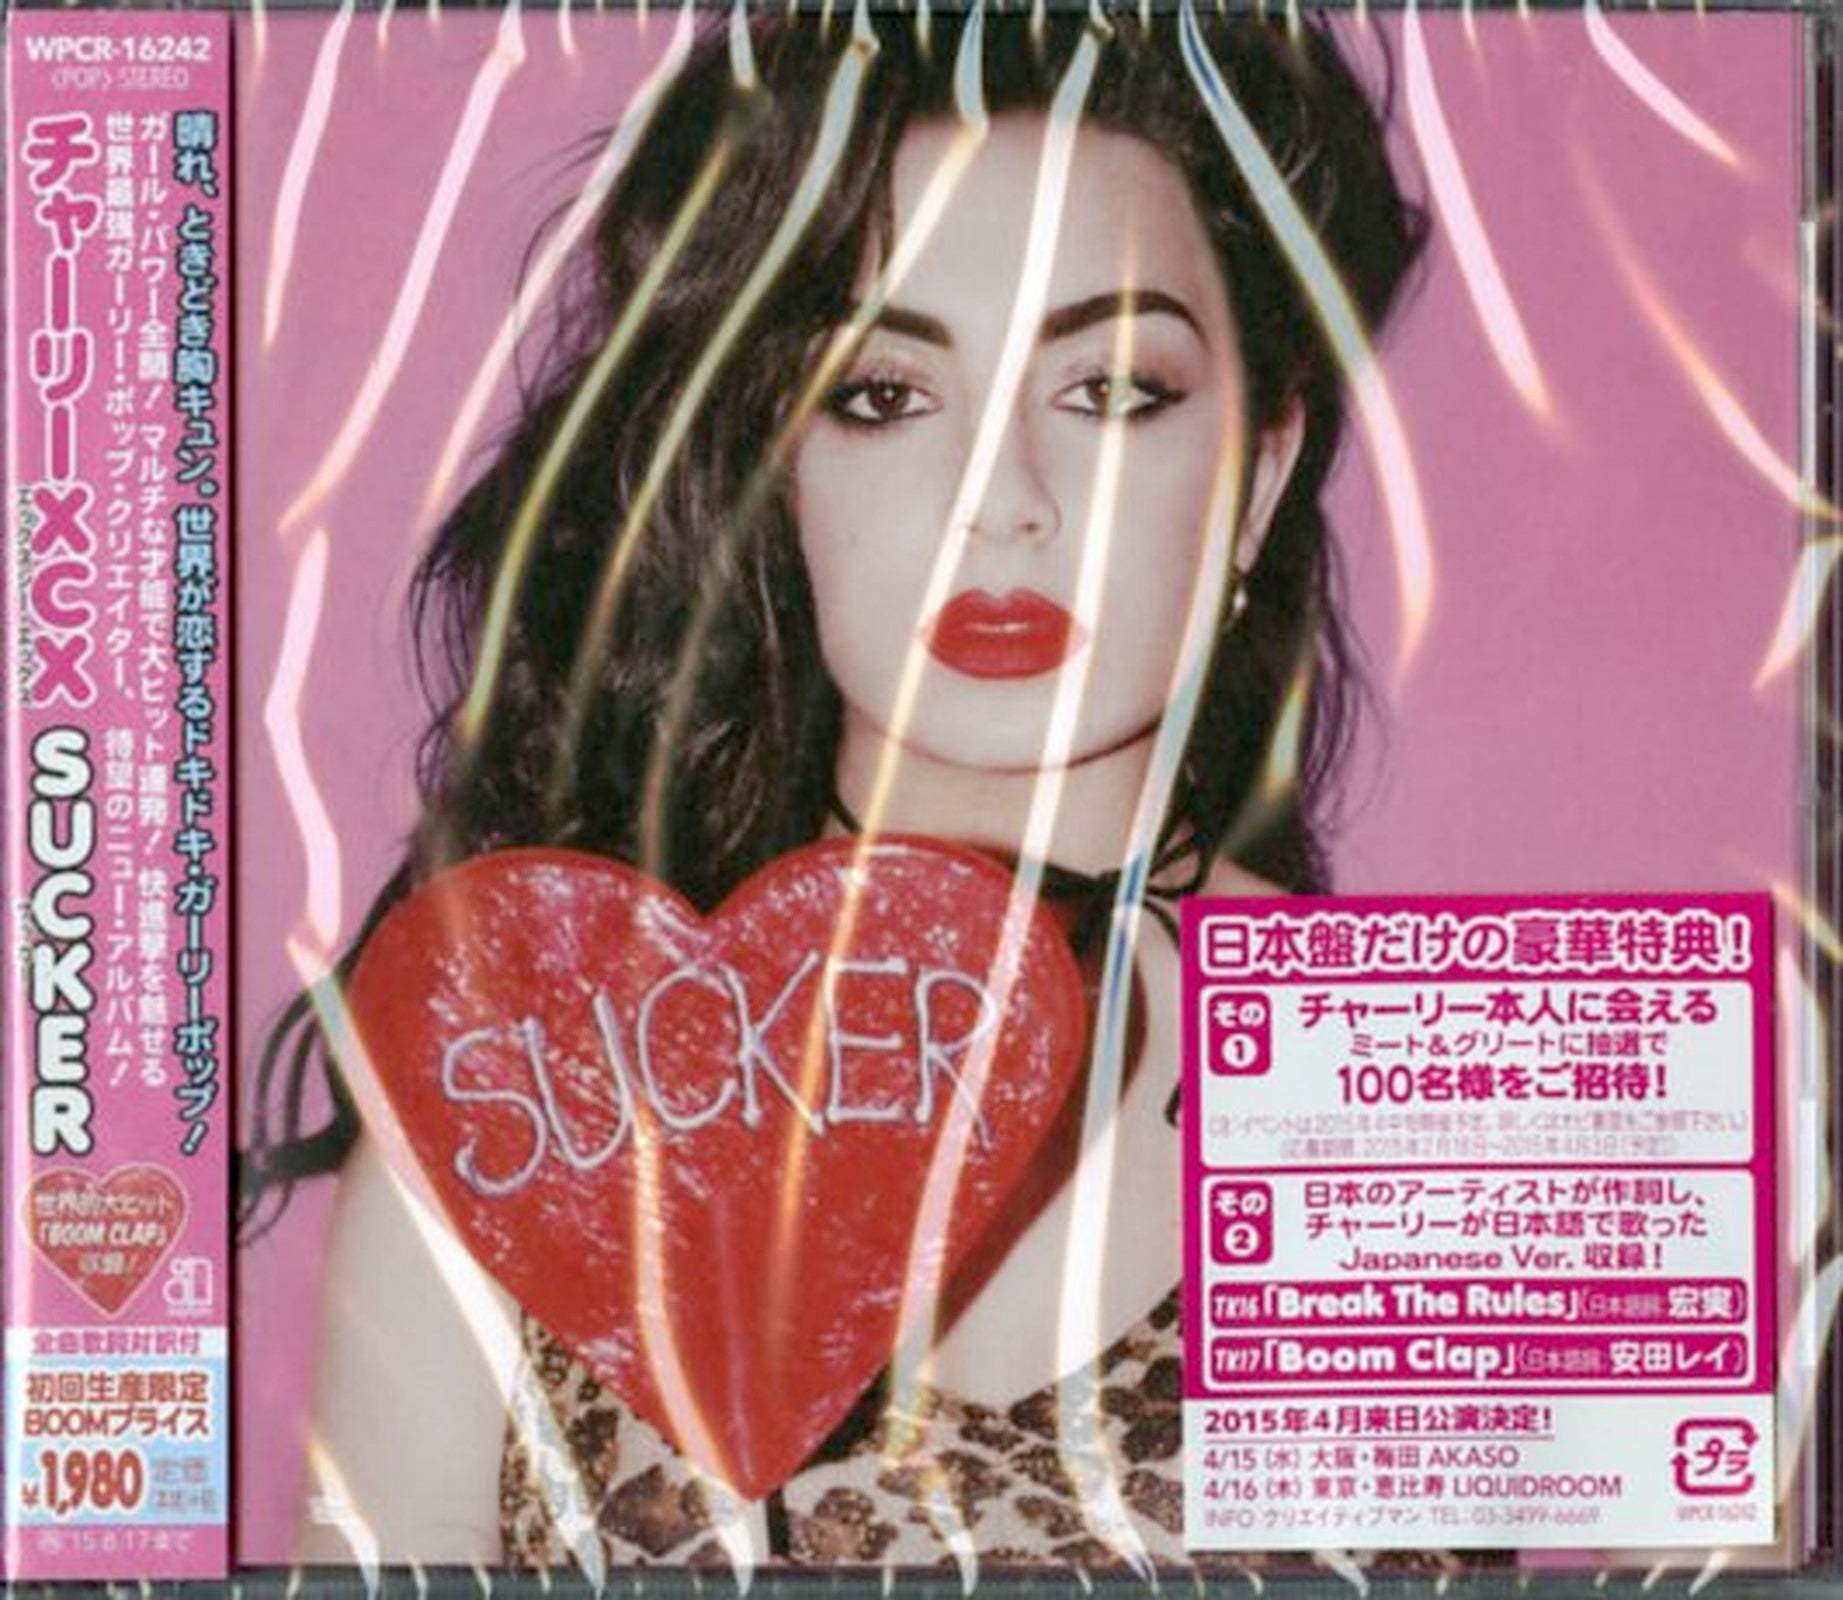 Charli Xcx - Sucker - Japan CD Bonus Track Limited Edition – CDs